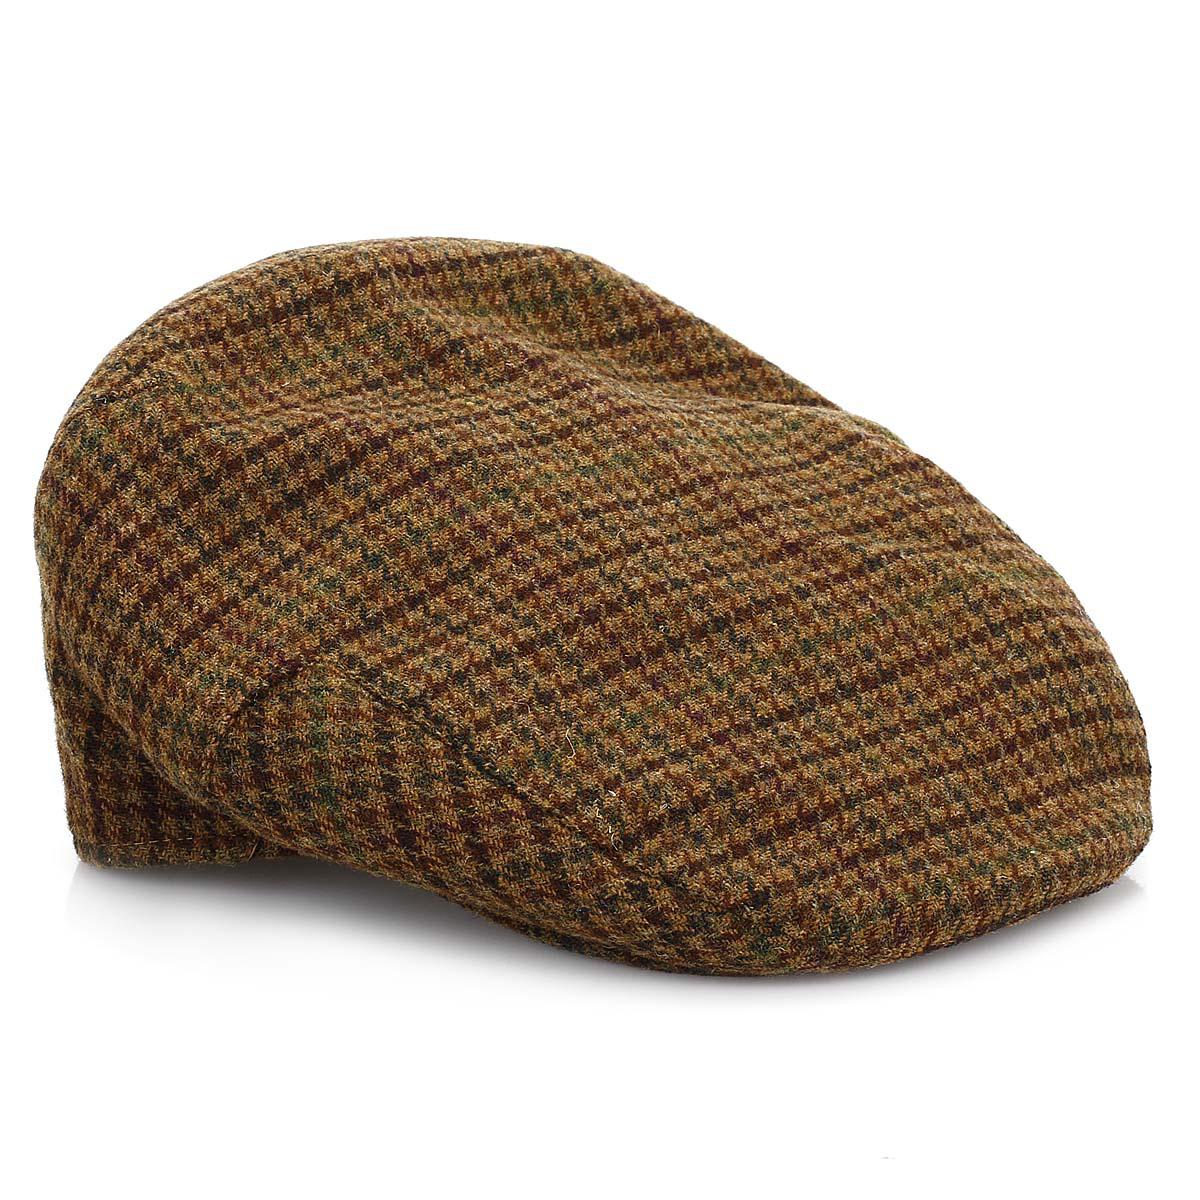 One Size Manufacturer Size:One Size Burton Menswear London Mens Brown Dogtooth Baker Boy Hat Flat Cap Brown